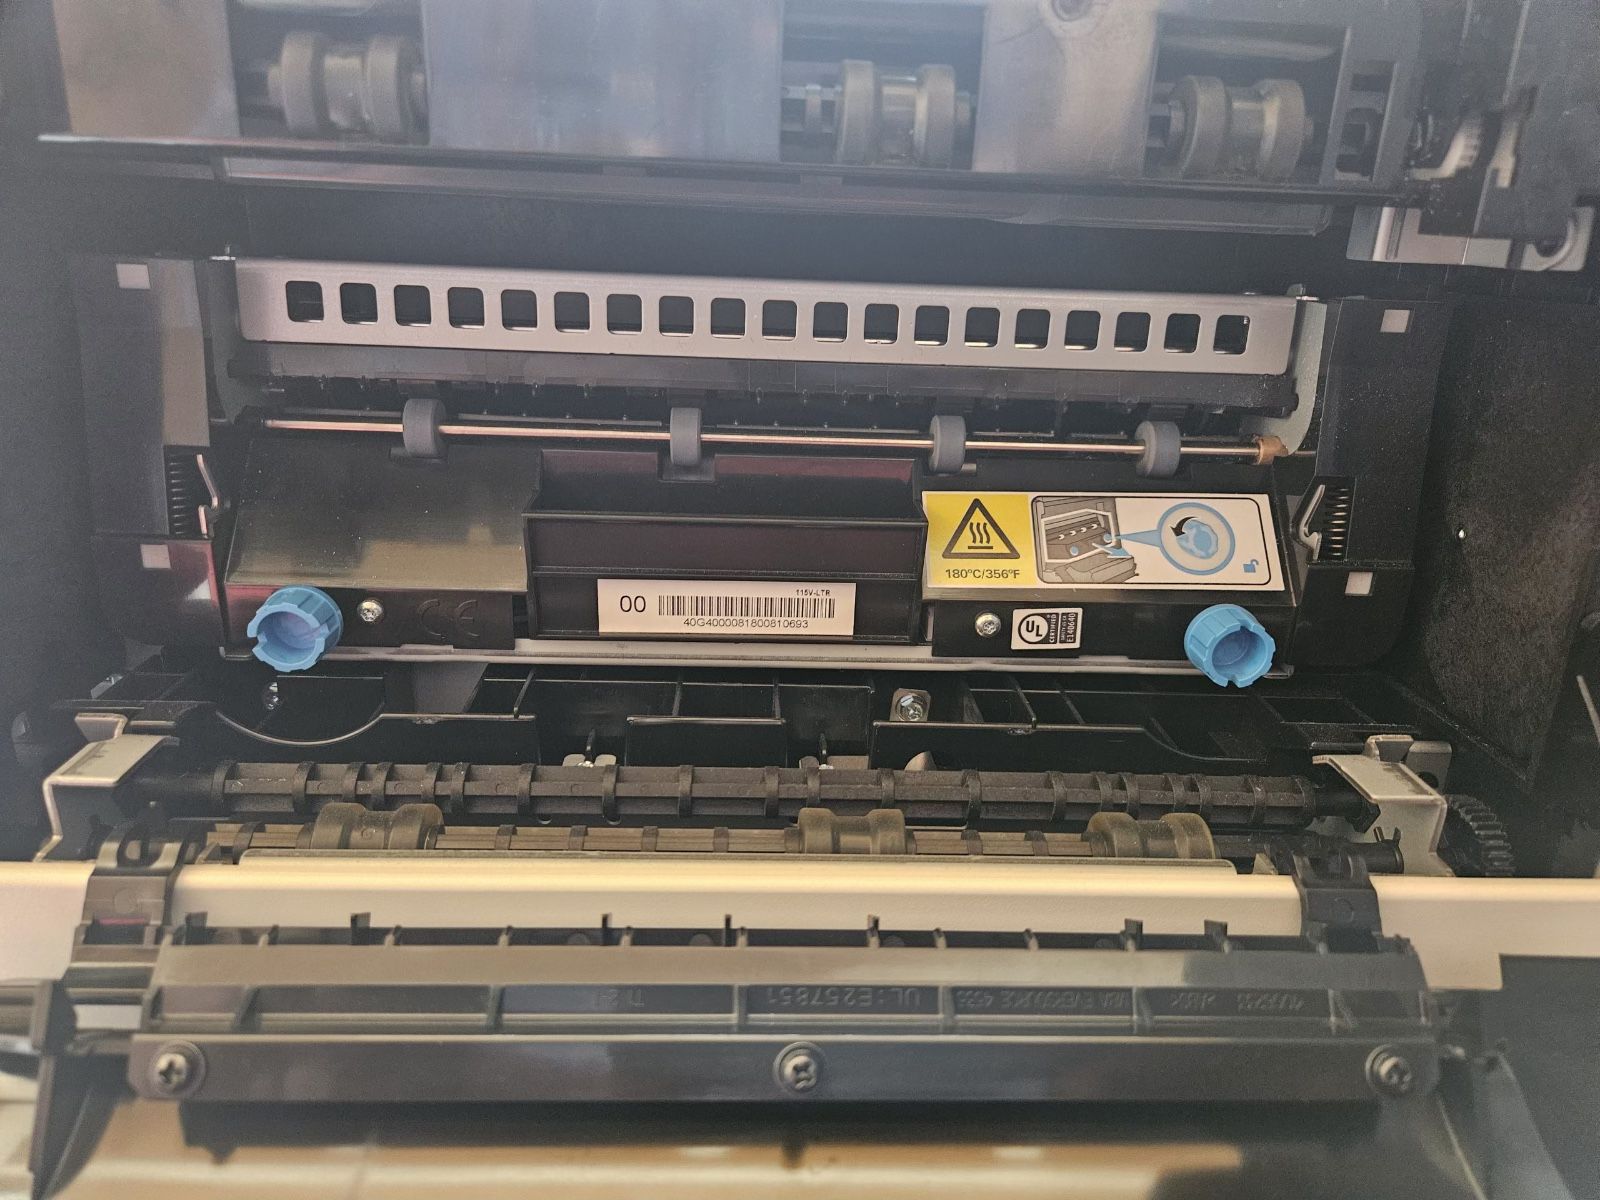 SourceTechnologies Lexmark ST9730 MICR Check Printer 55 PPM